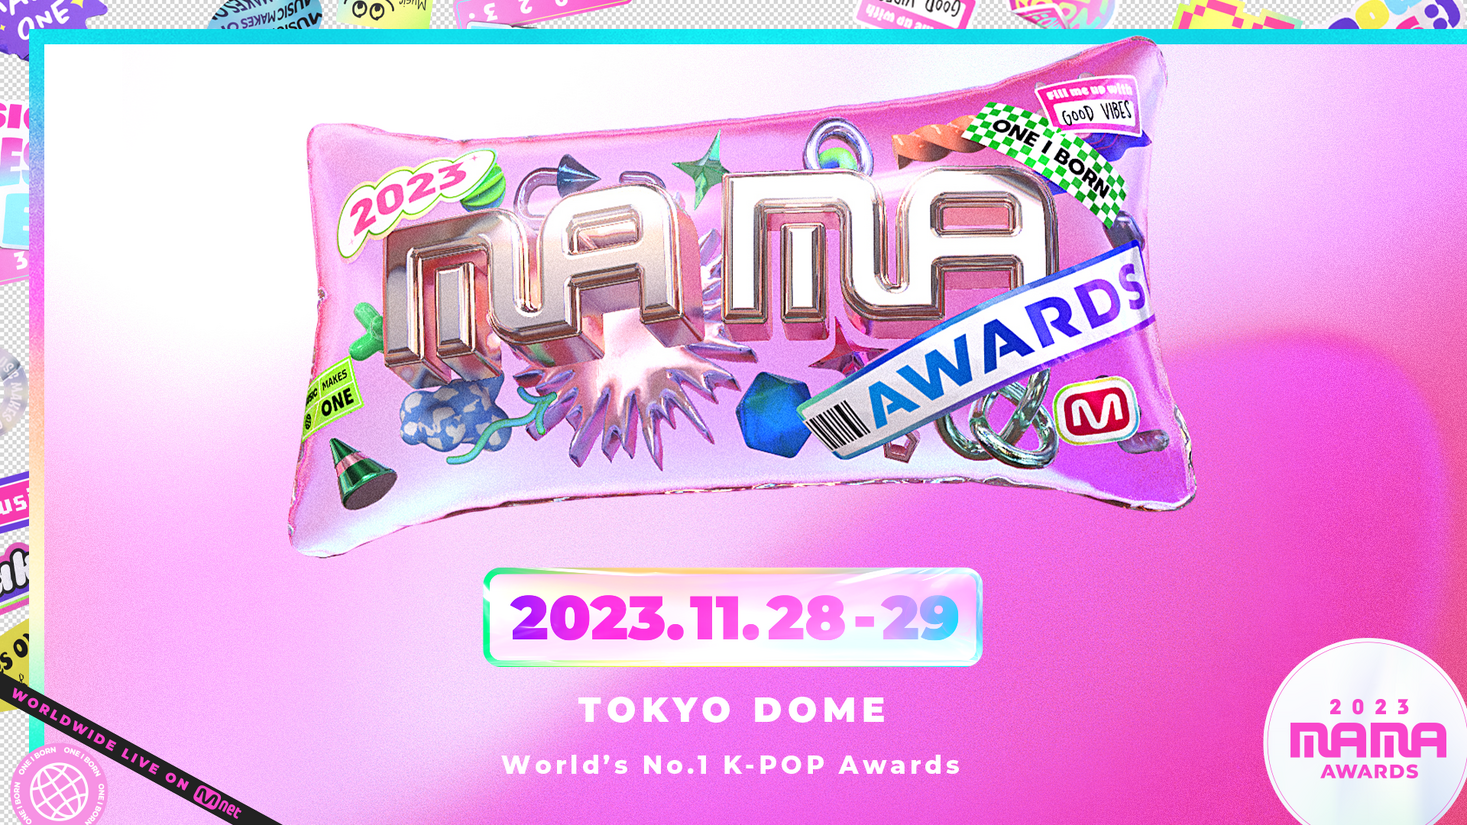 ‘MAMA AWARDS 2023’은 11월 28일과 29일 양일간 진행됩니다!  첫 번째 MAMA 이벤트가 도쿄돔에서 개최됩니다!  글로벌 라이브 방송 예정!다양한 장르와 글로벌 세대가 ‘음악’으로 뭉친다